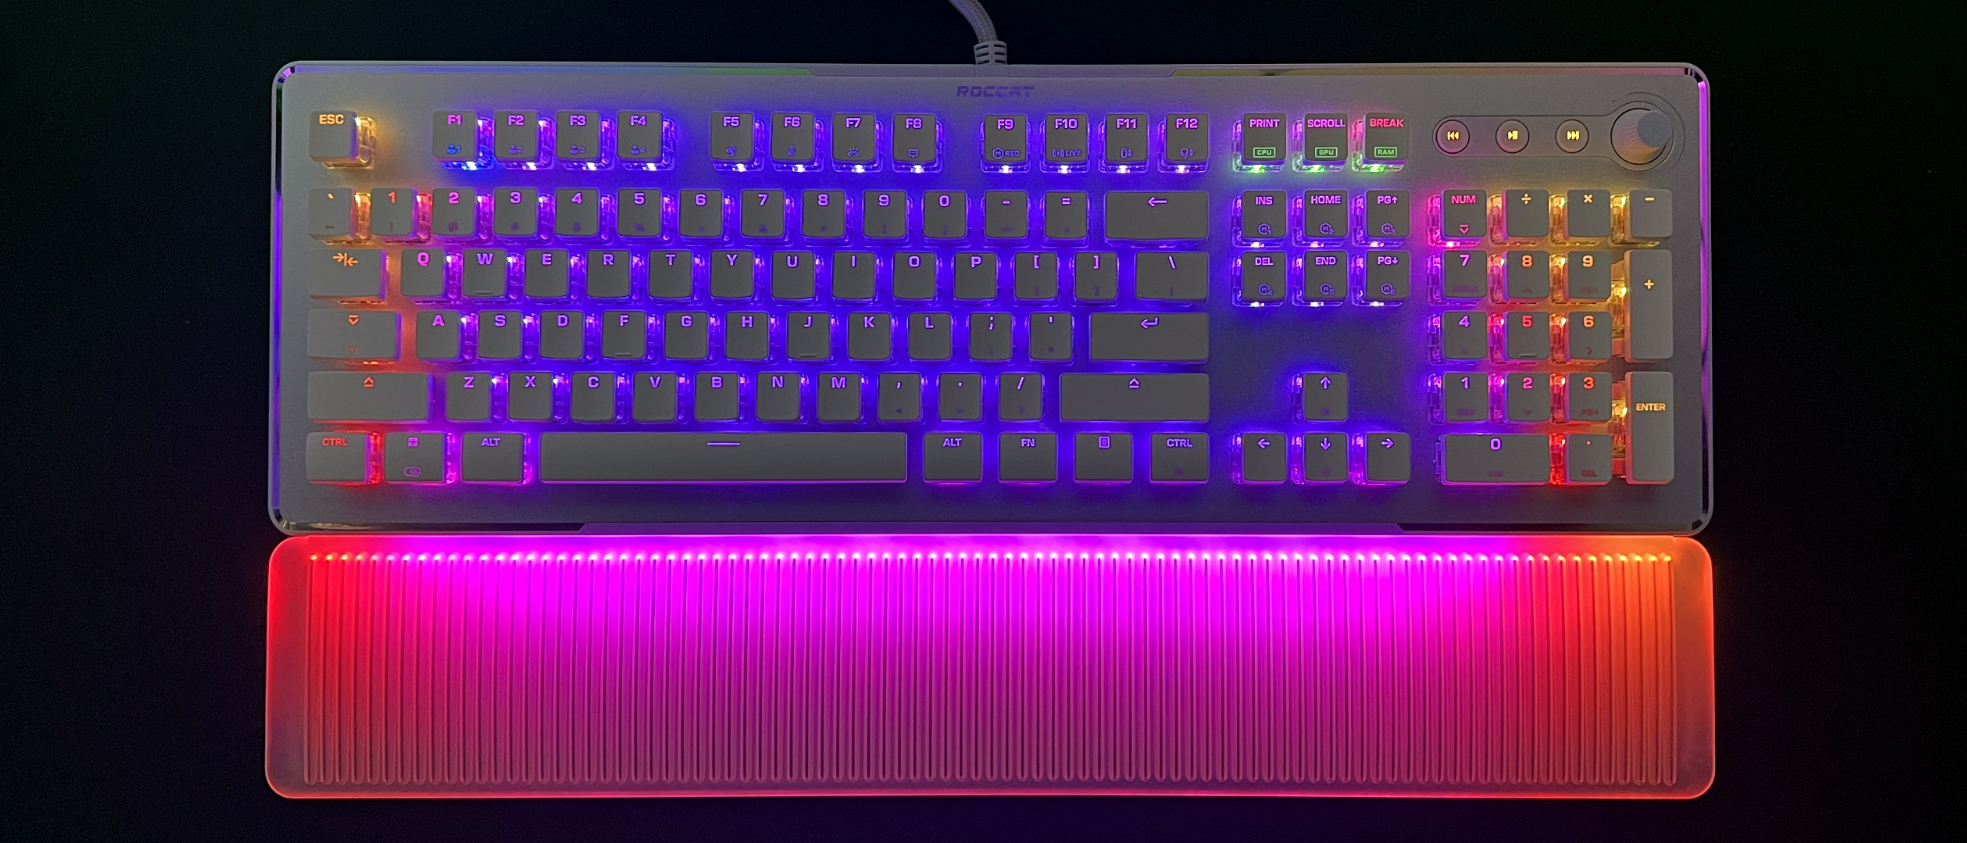 Best Looking Gaming Keyboard: Roccat Vulcan II Max